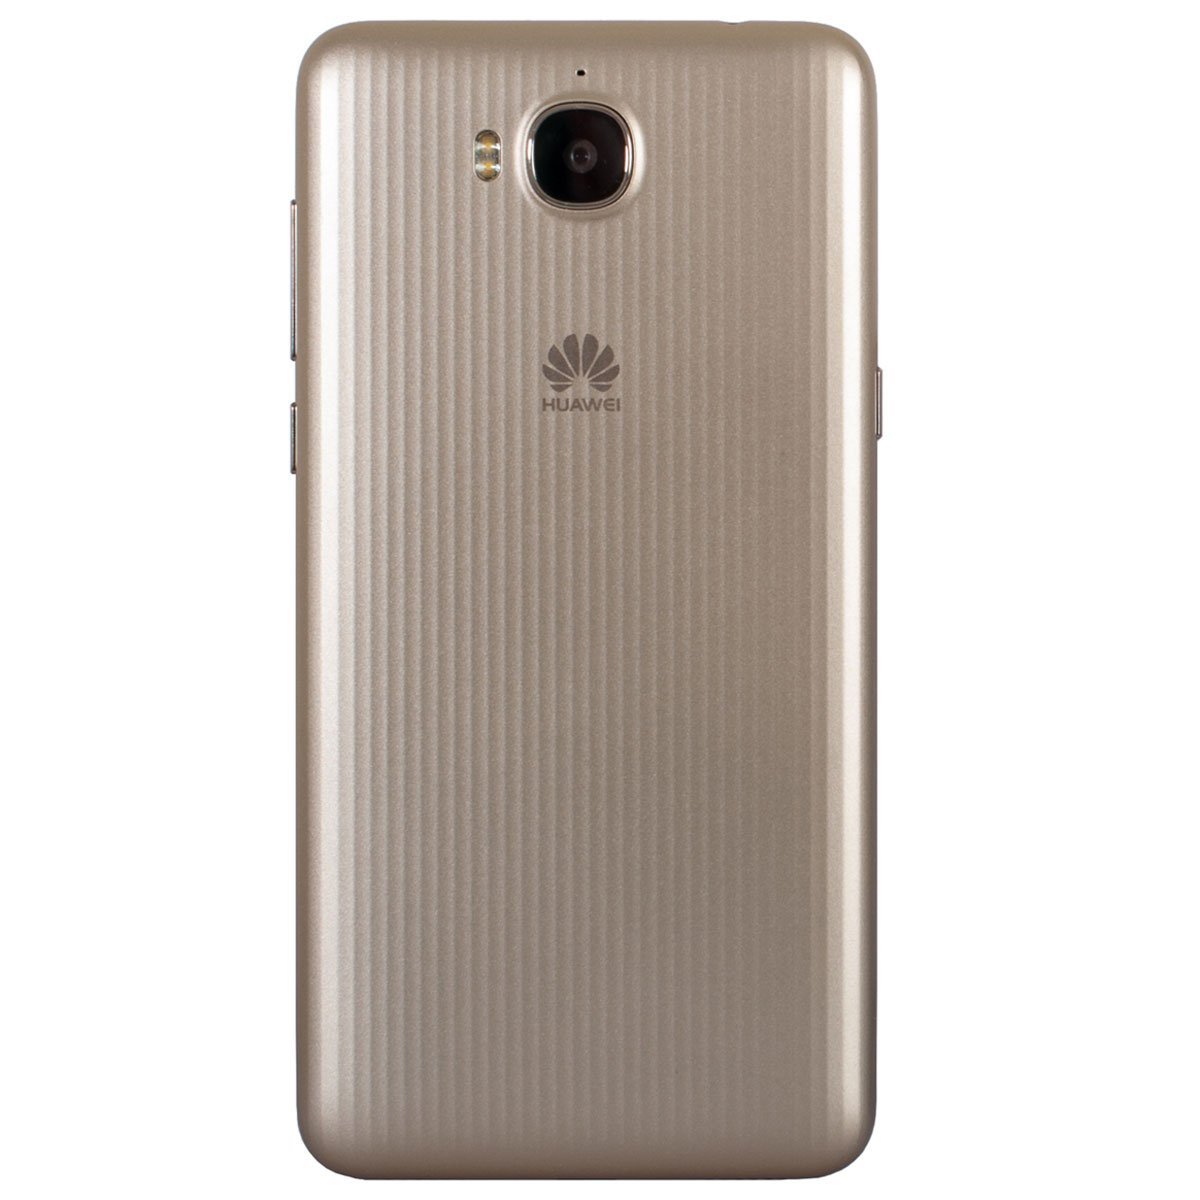 Celular Huawei Y5 Pro Mya L13 Color Dorado R9 (Telcel)